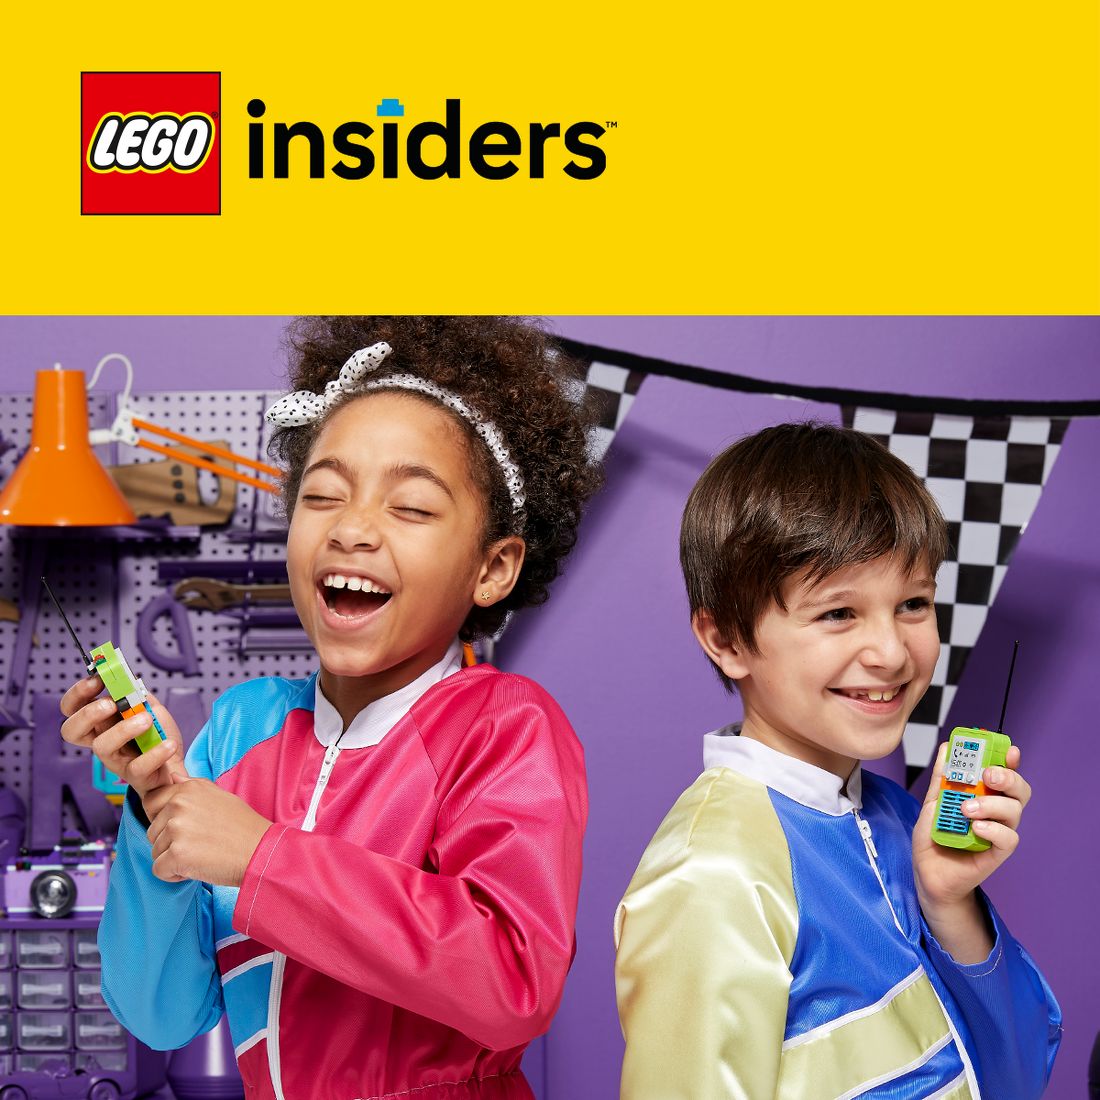 LEGO Insiders